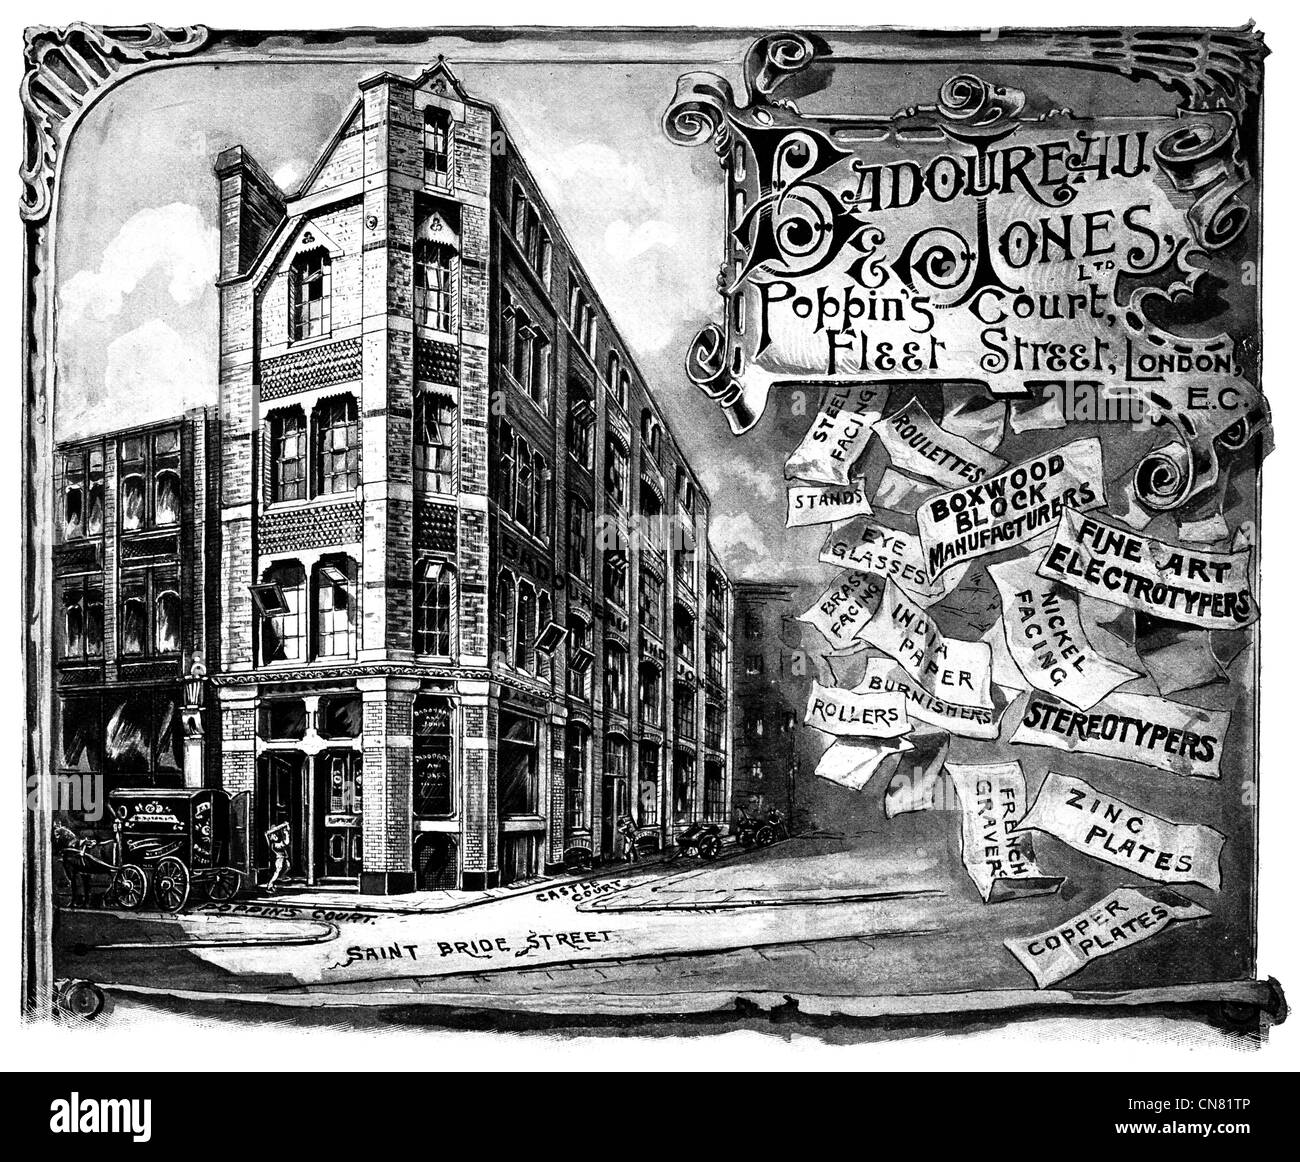 Badoureau & Jones Fleet Street London Fine Art, Zinkplatten, Kupfer, Indien, Brillen, Roulettes, Buchsbaum Block, 1904 Stockfoto